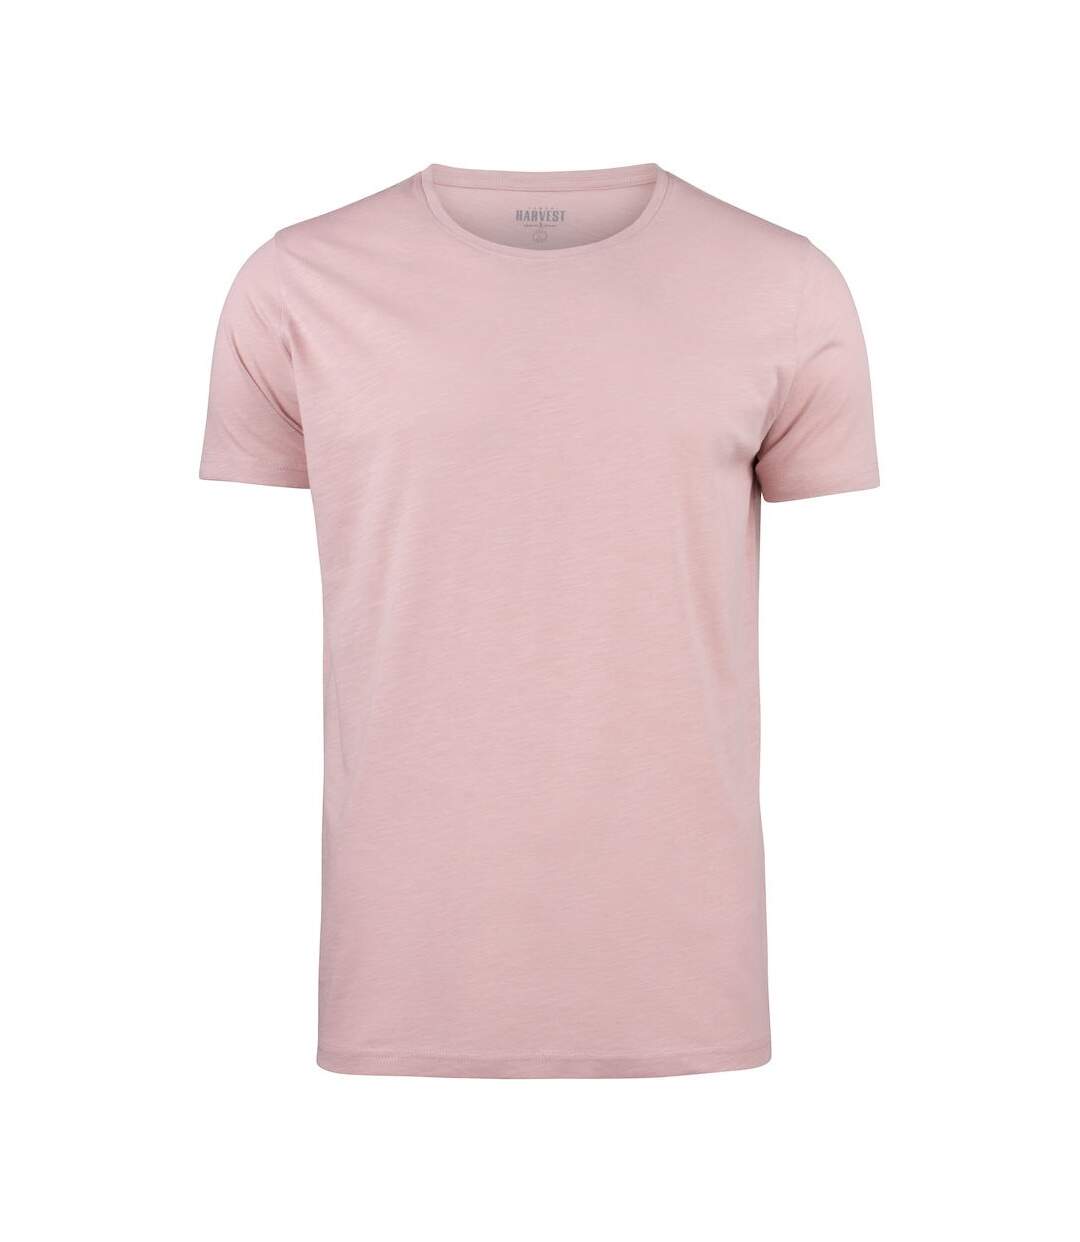 James Harvest - T-shirt TWOVILLE - Homme (Vieux rose) - UTUB252